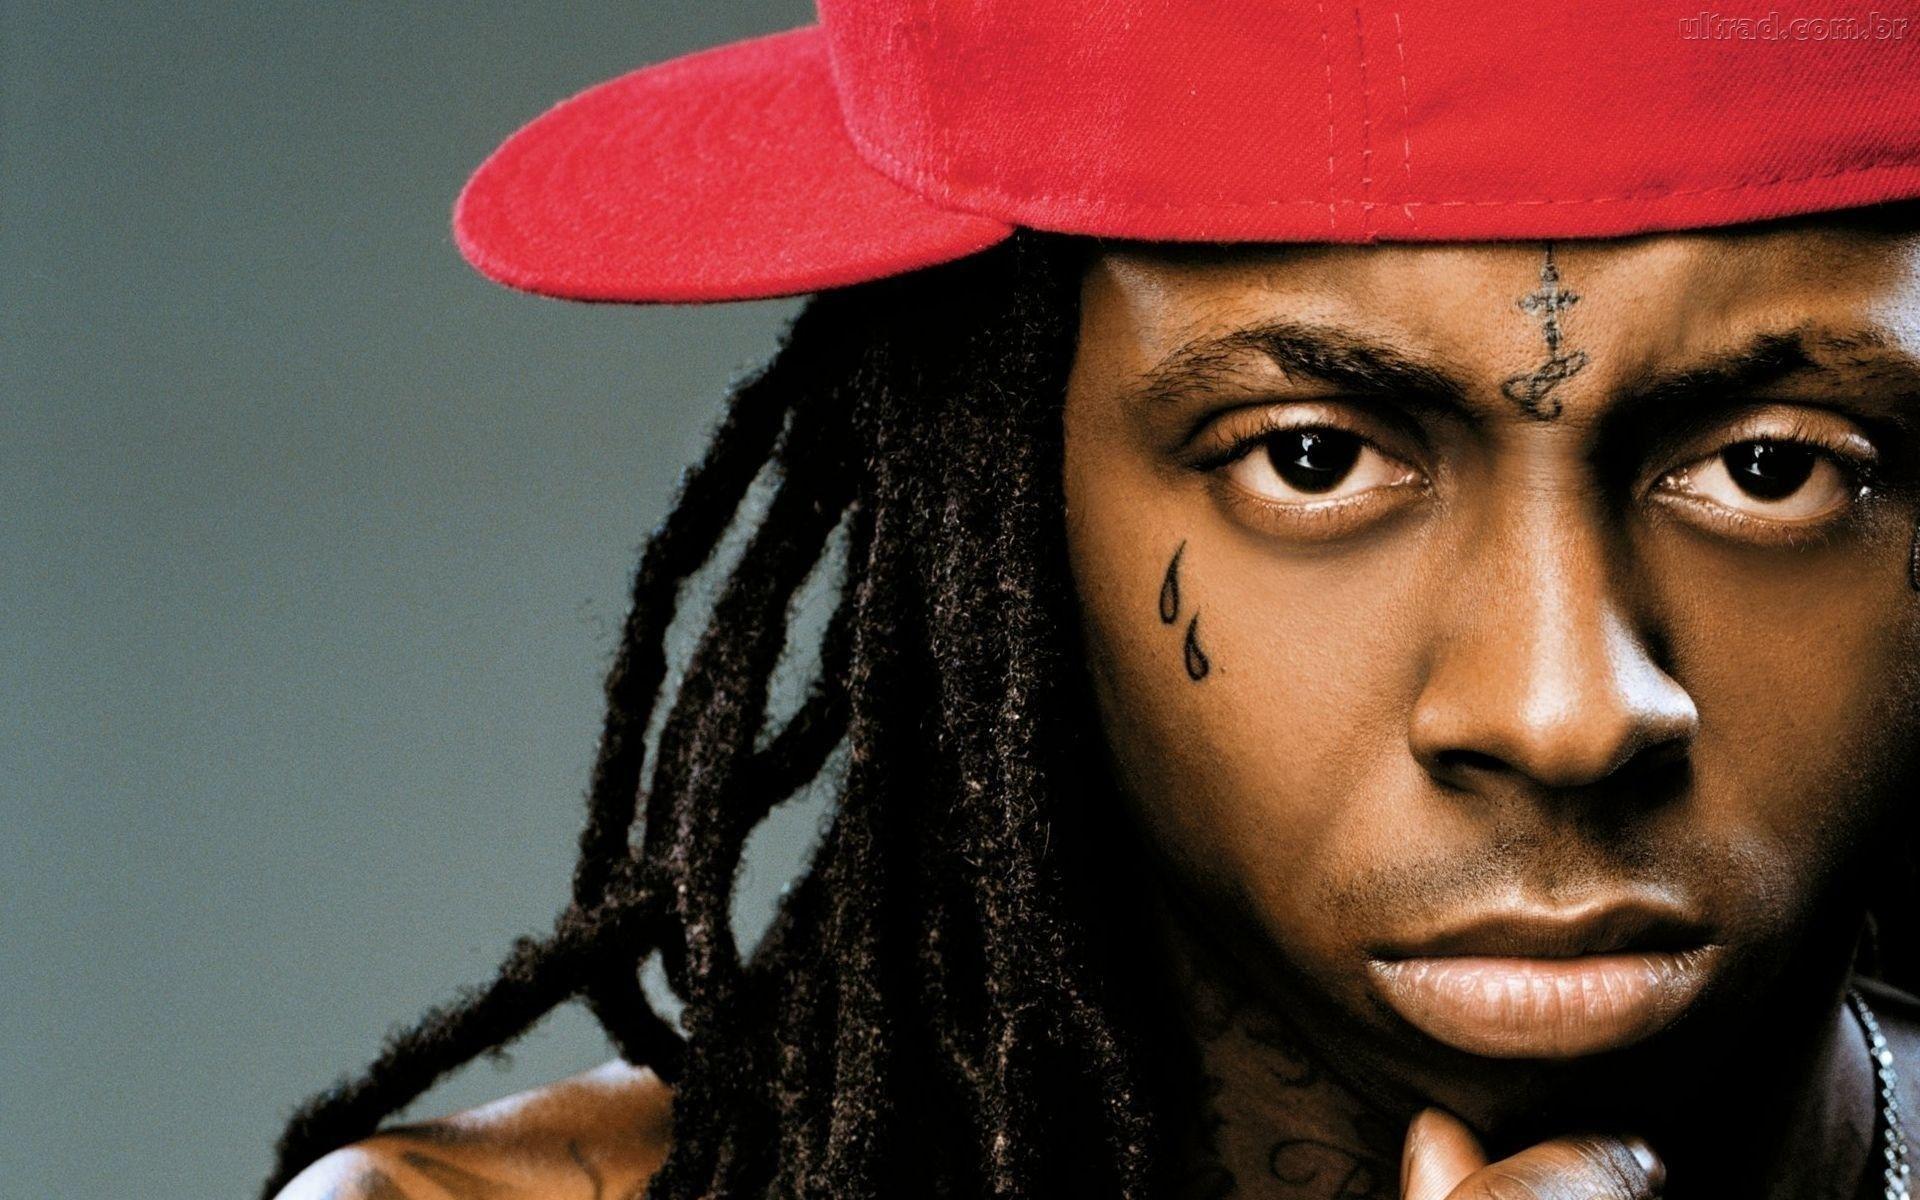 Lil Wayne. iPhone wallpaper for free